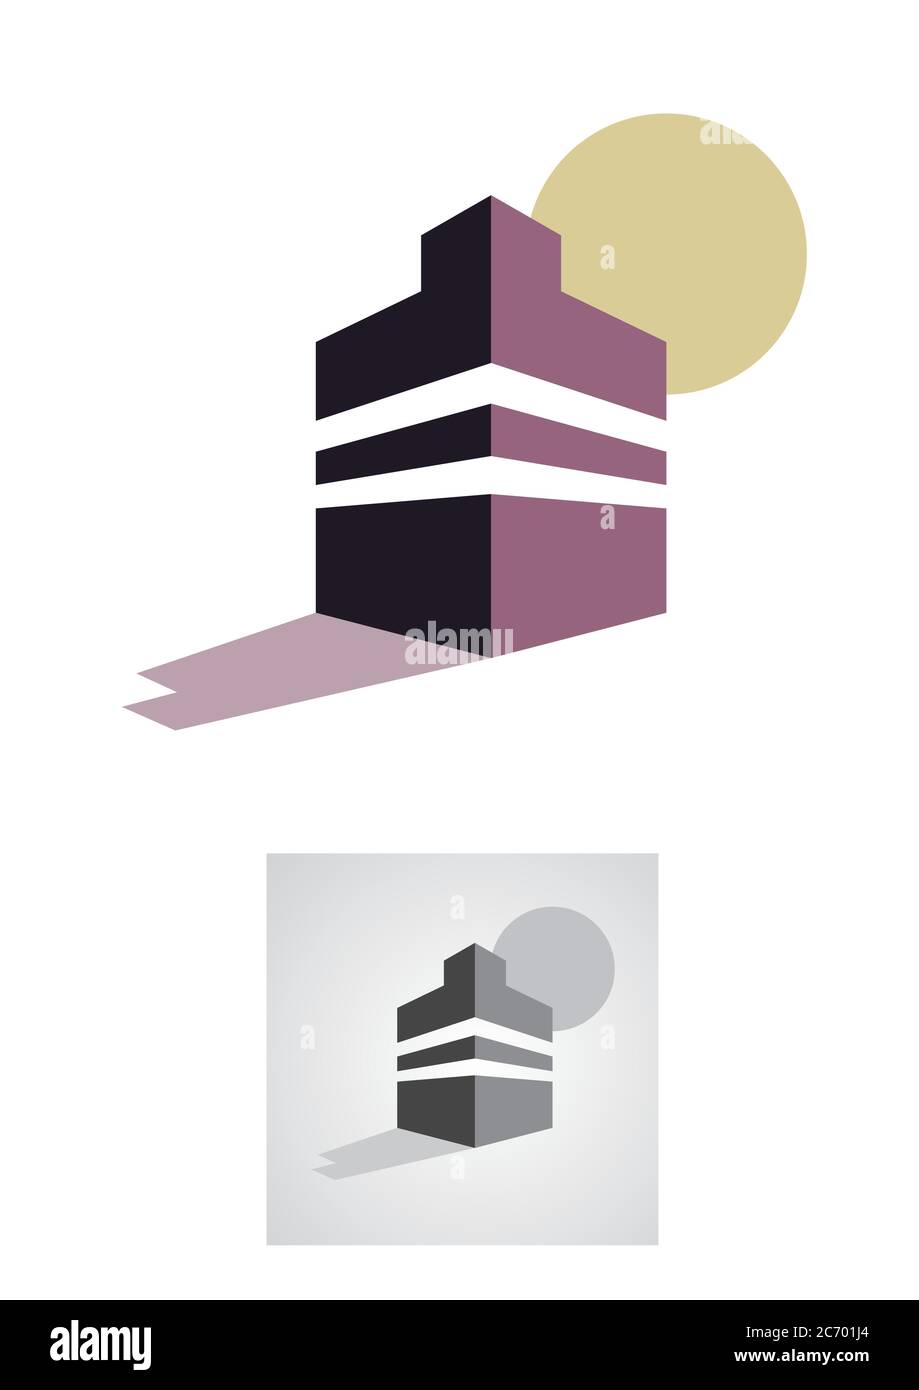 Building symbol illustration. Corporate branding identity vector design. Urban residential marketing icon. Stock Vector